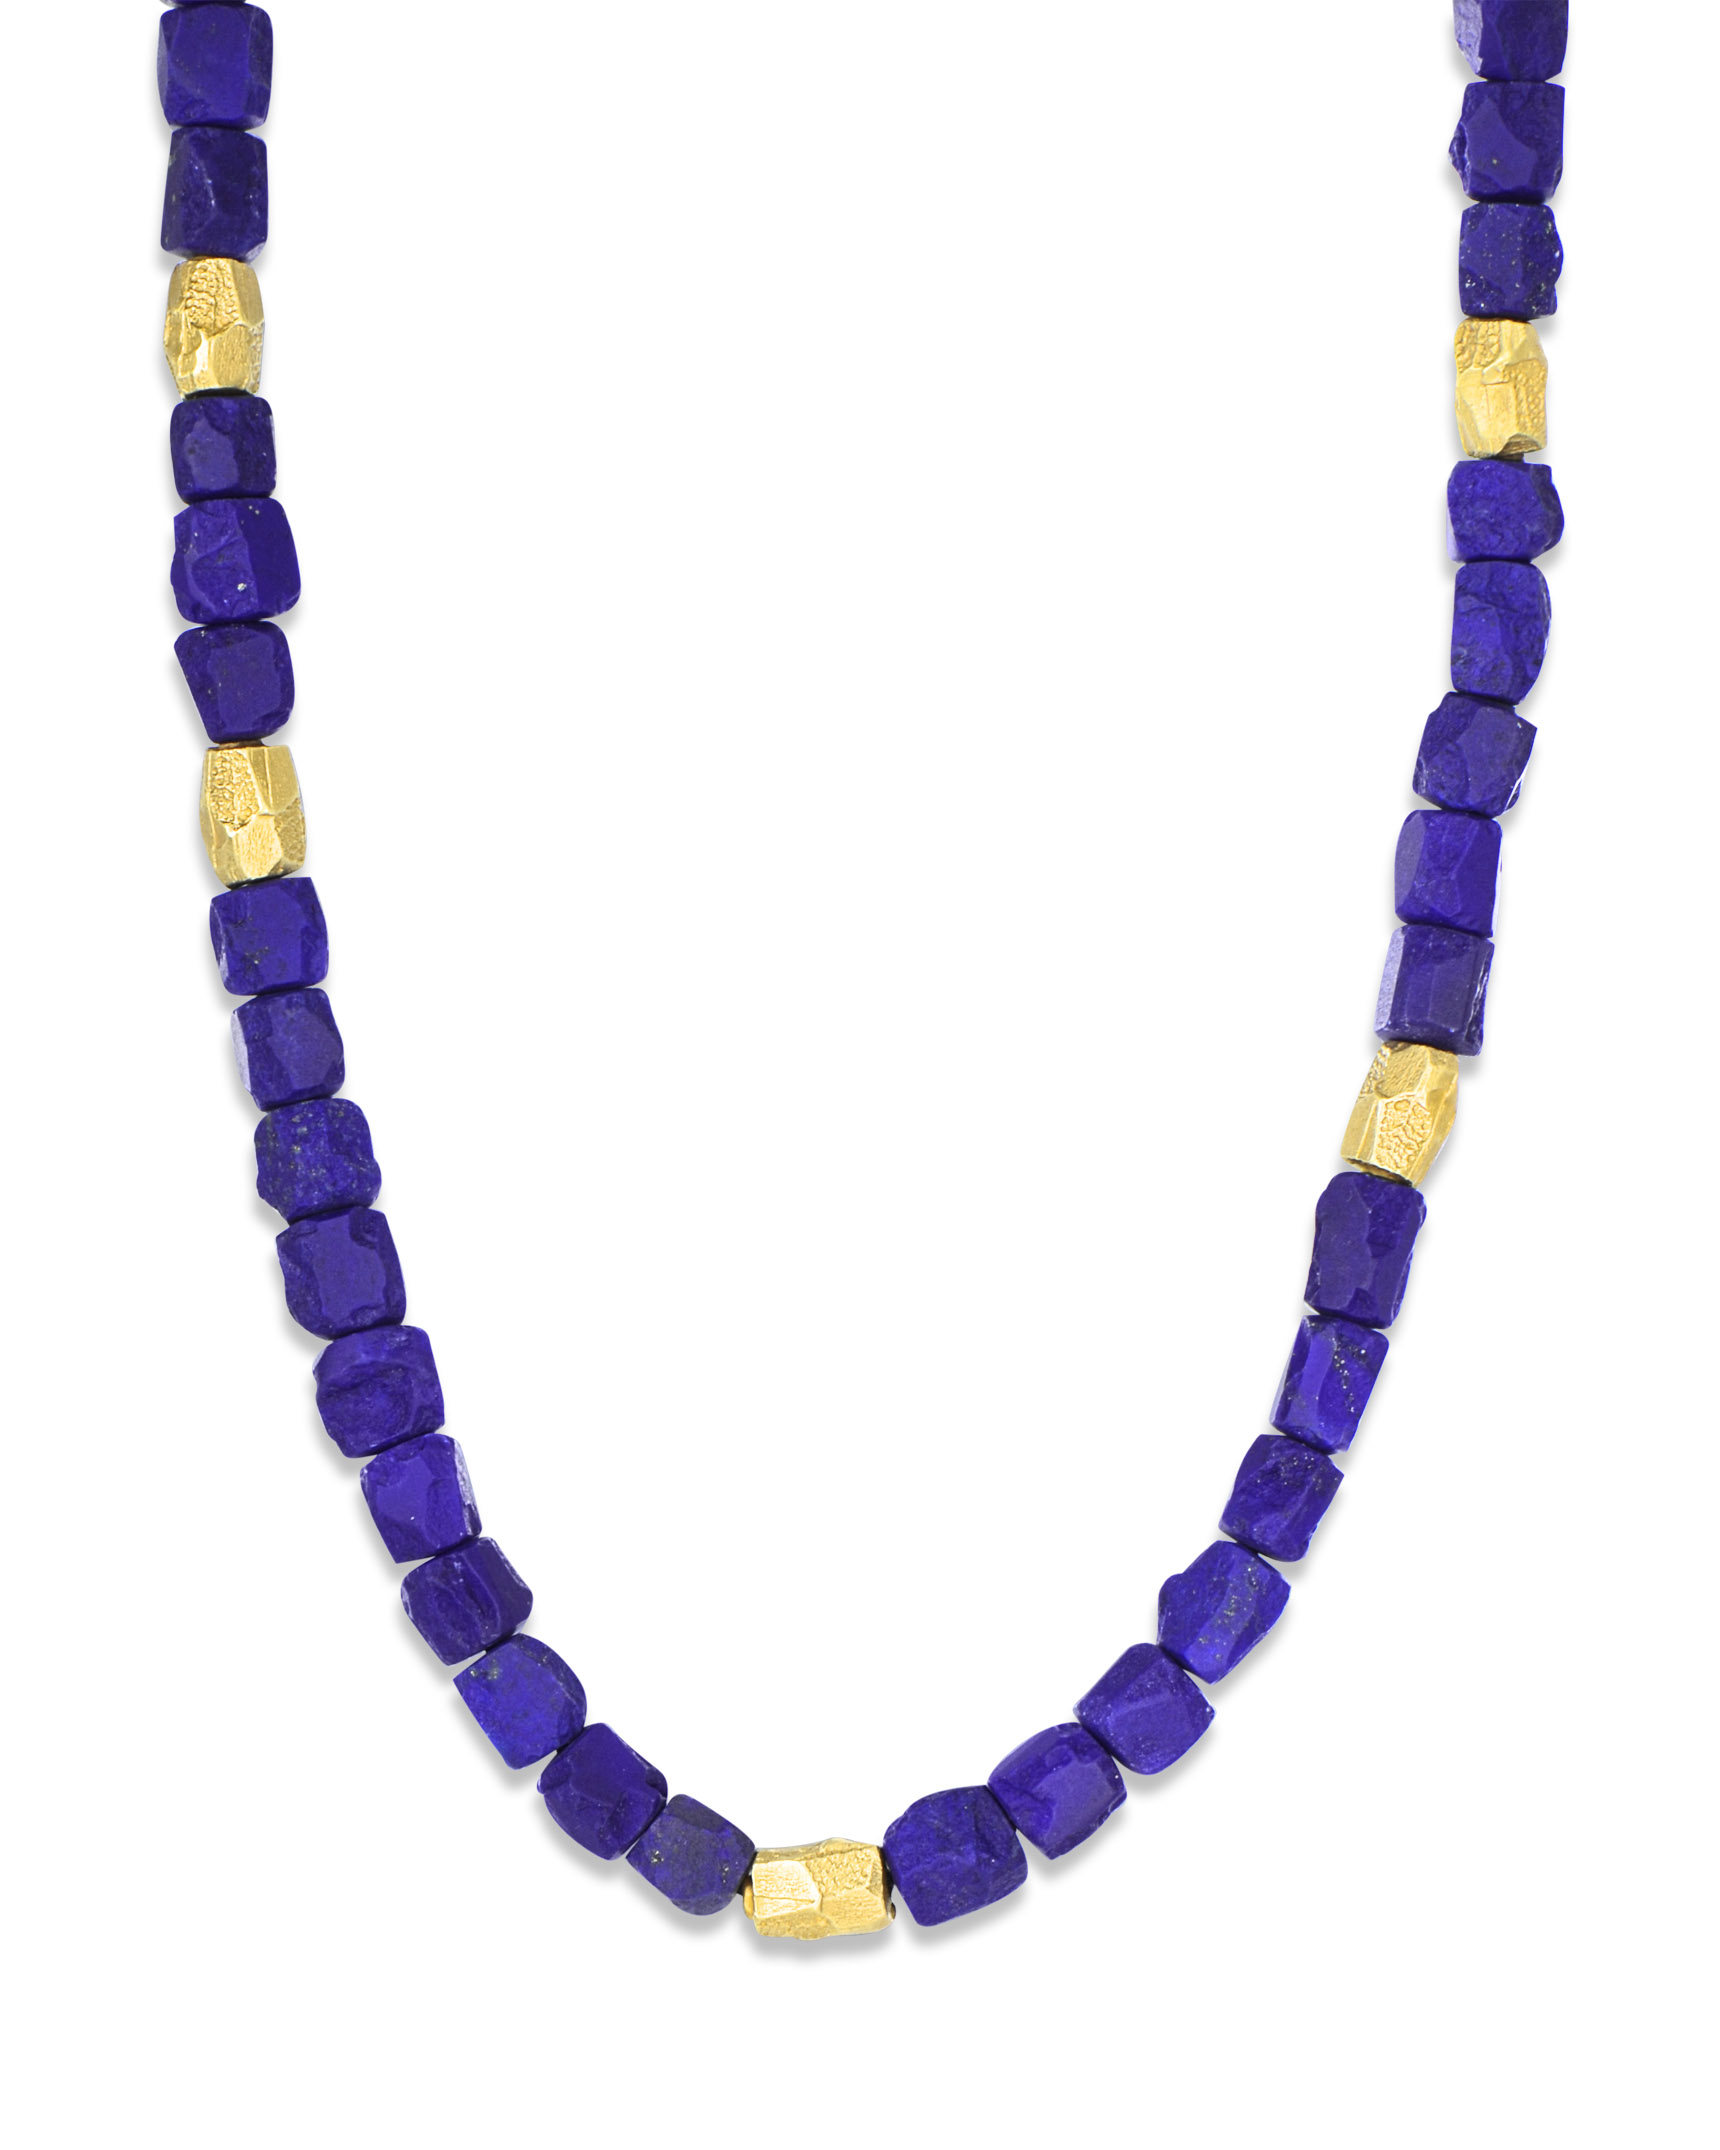 Lapis lazuli bead necklace